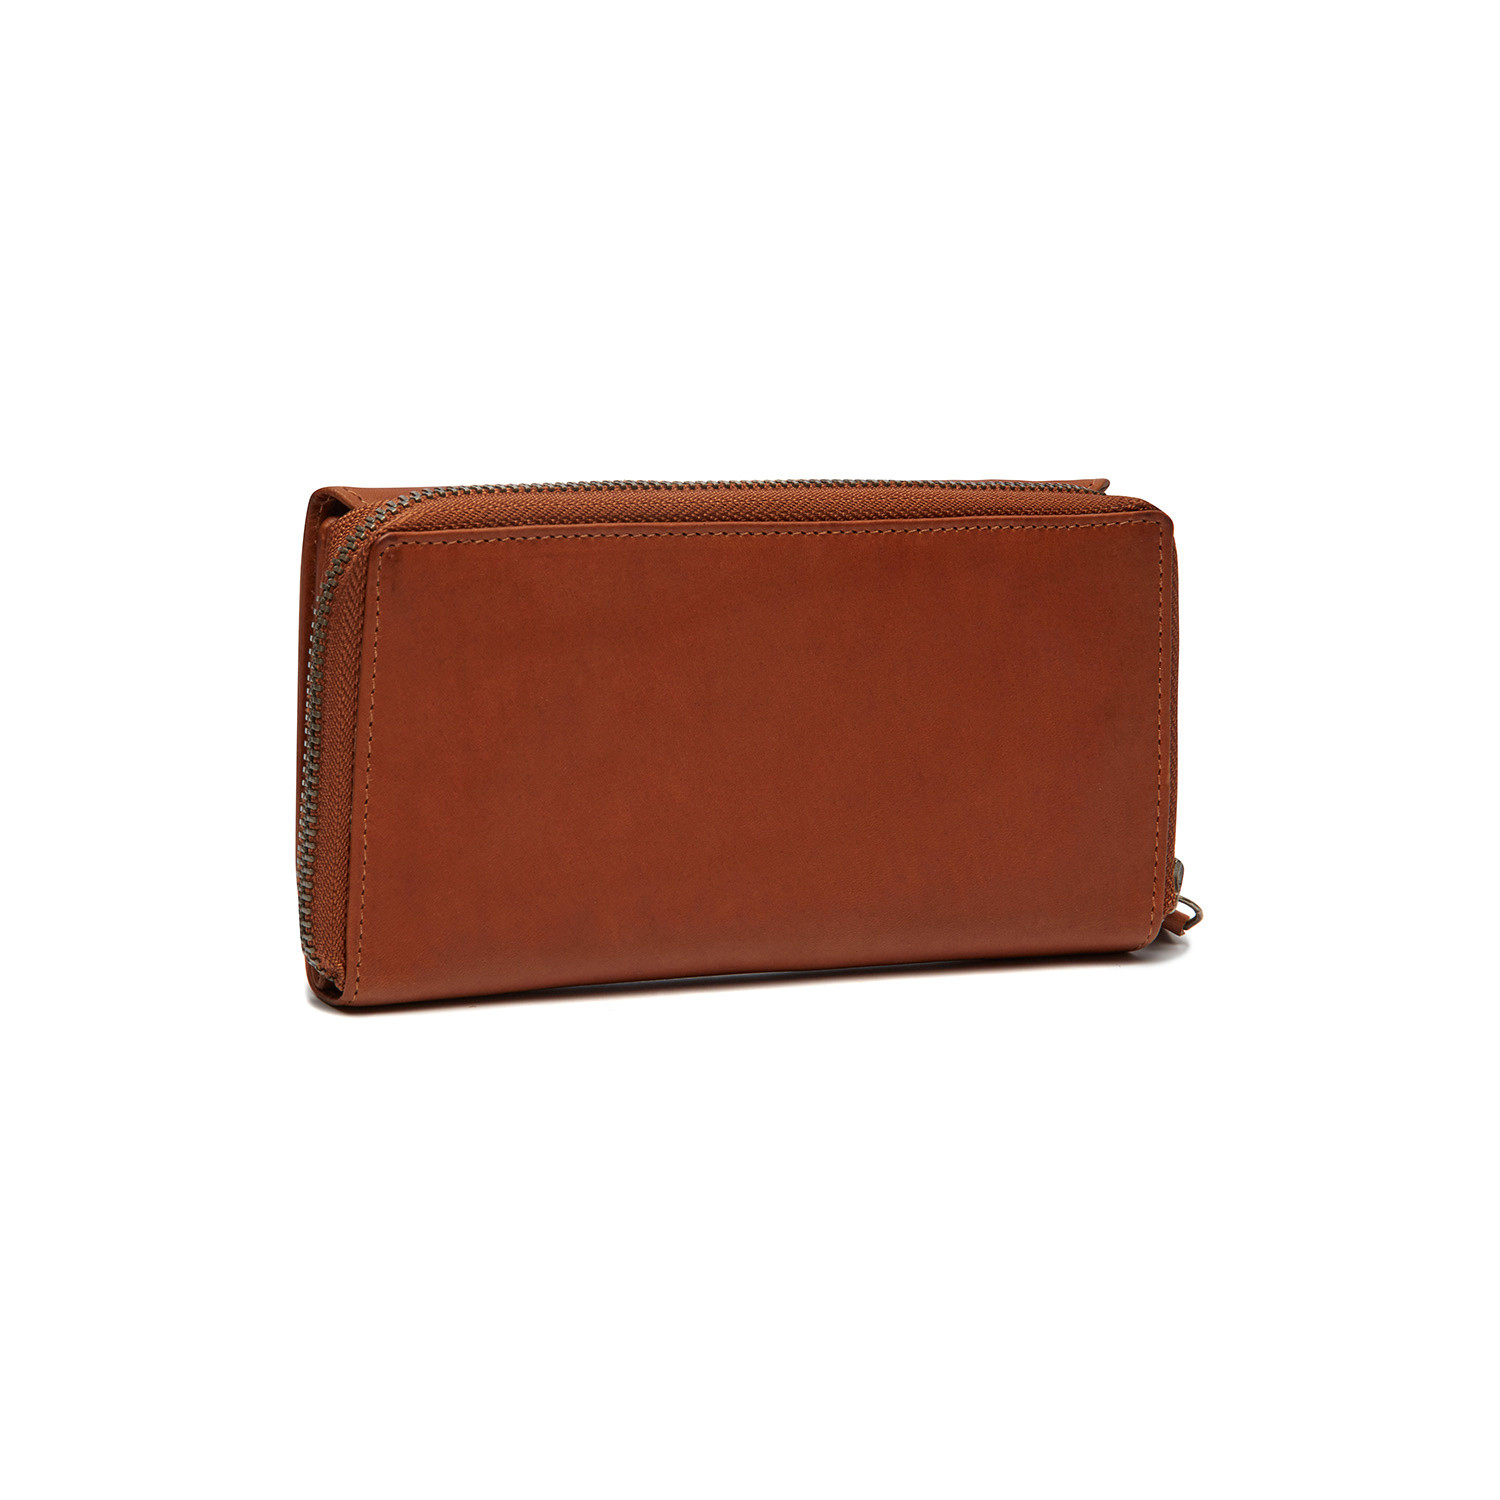 LUCKY BRAND Zip Around Tan Leather Clutch Wallet | eBay